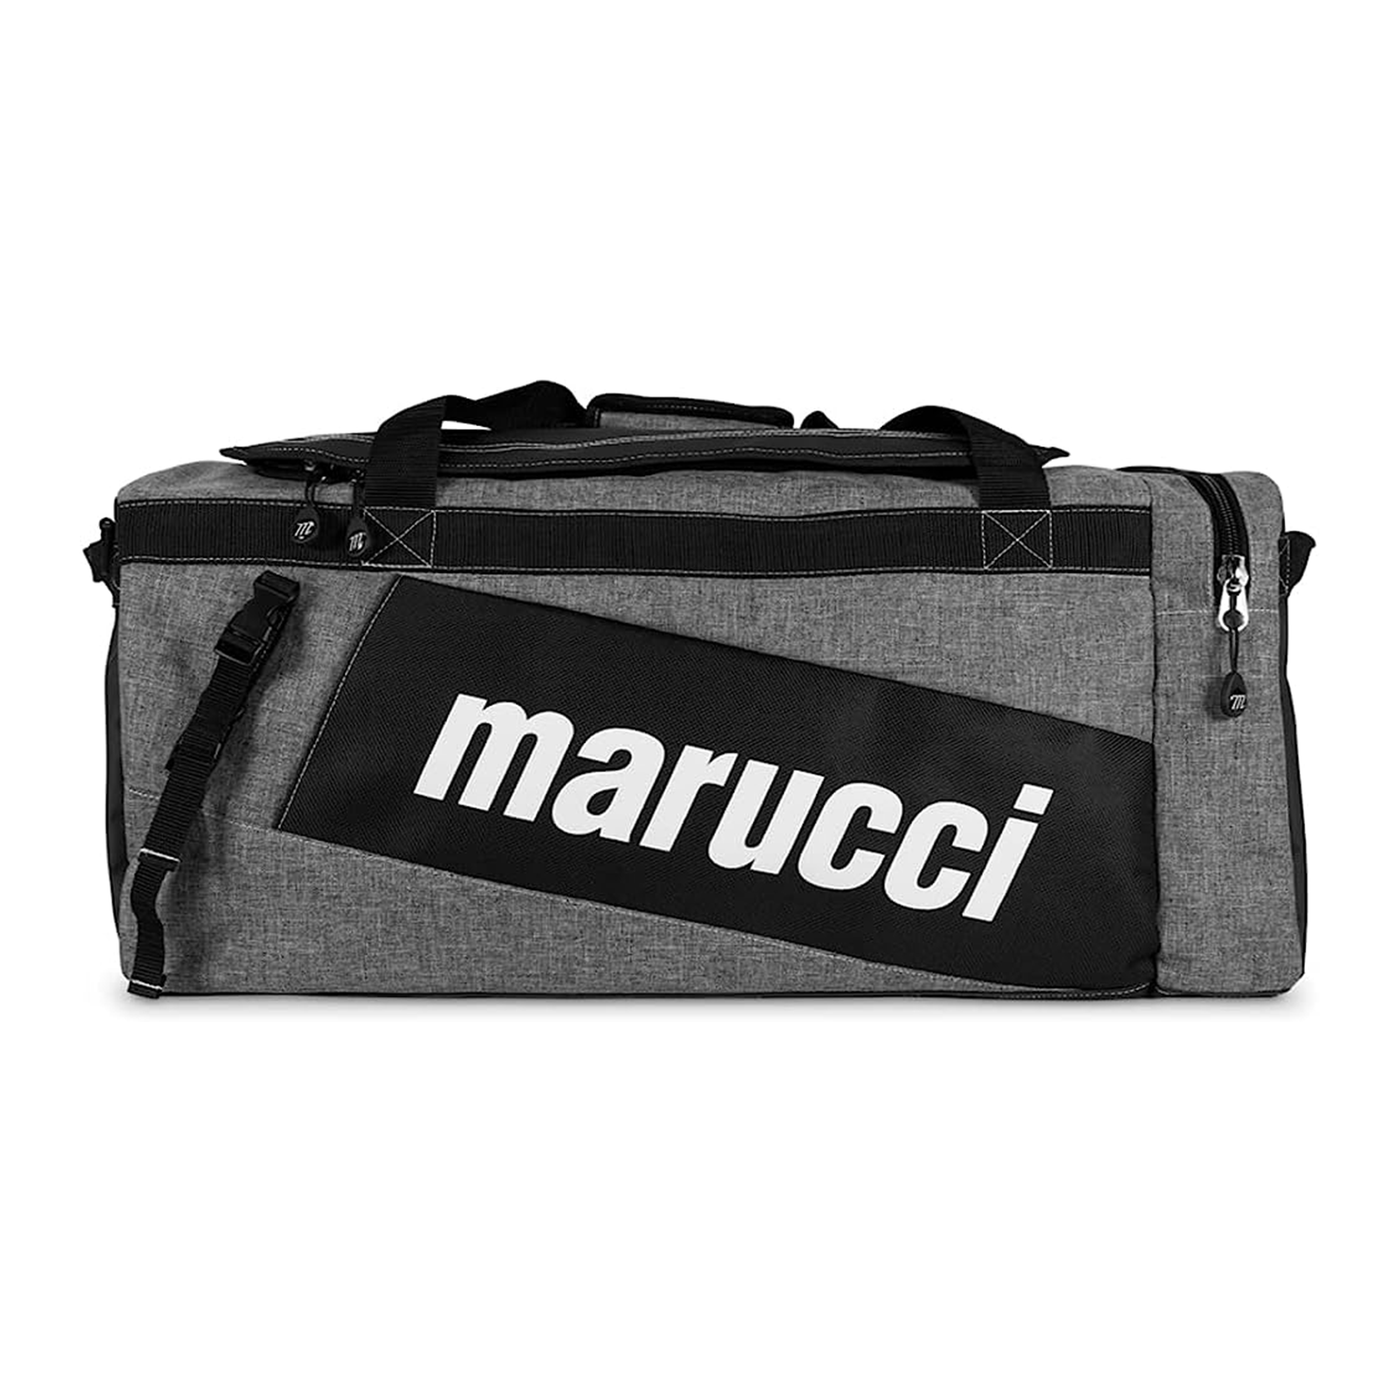 Marucci Pro Utility Duffle Bag